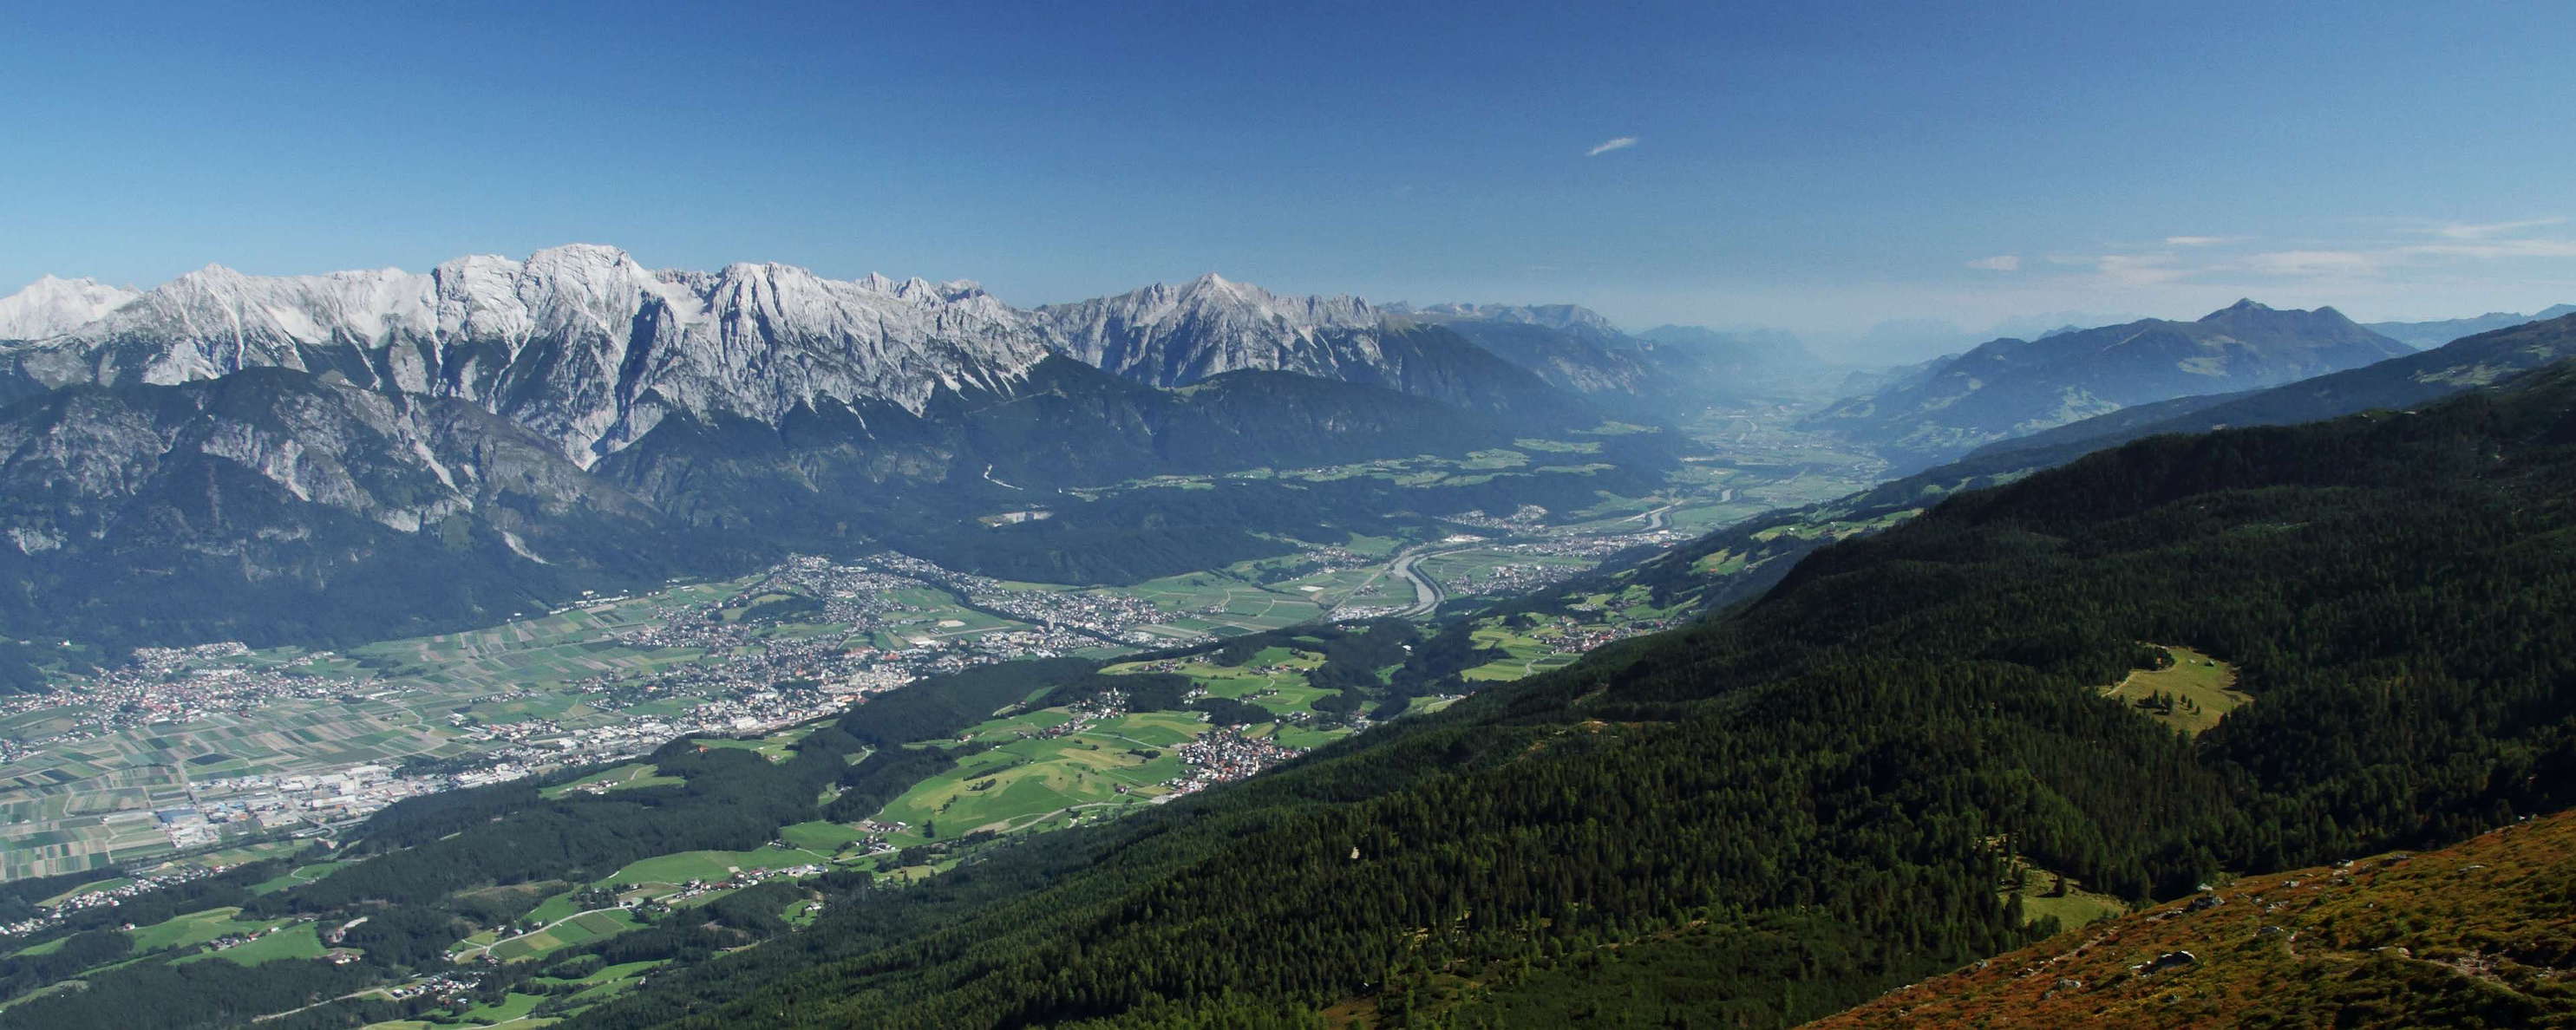 Lower Inntal Valley with Karwendel Mountains